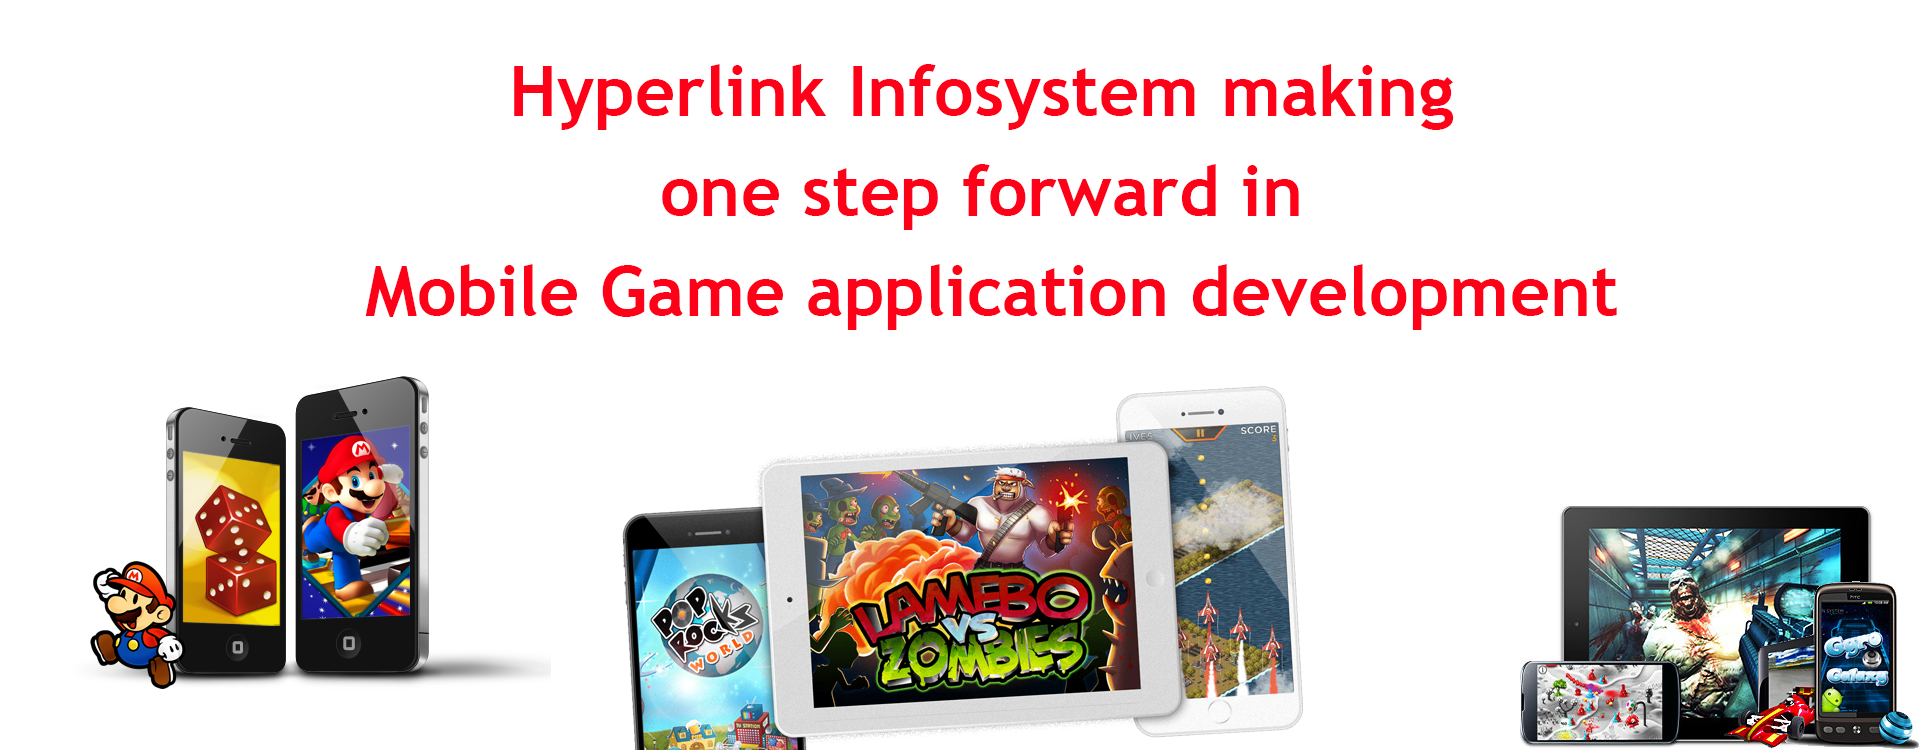 hyperlink infosystem making one step forward in mobile game application development